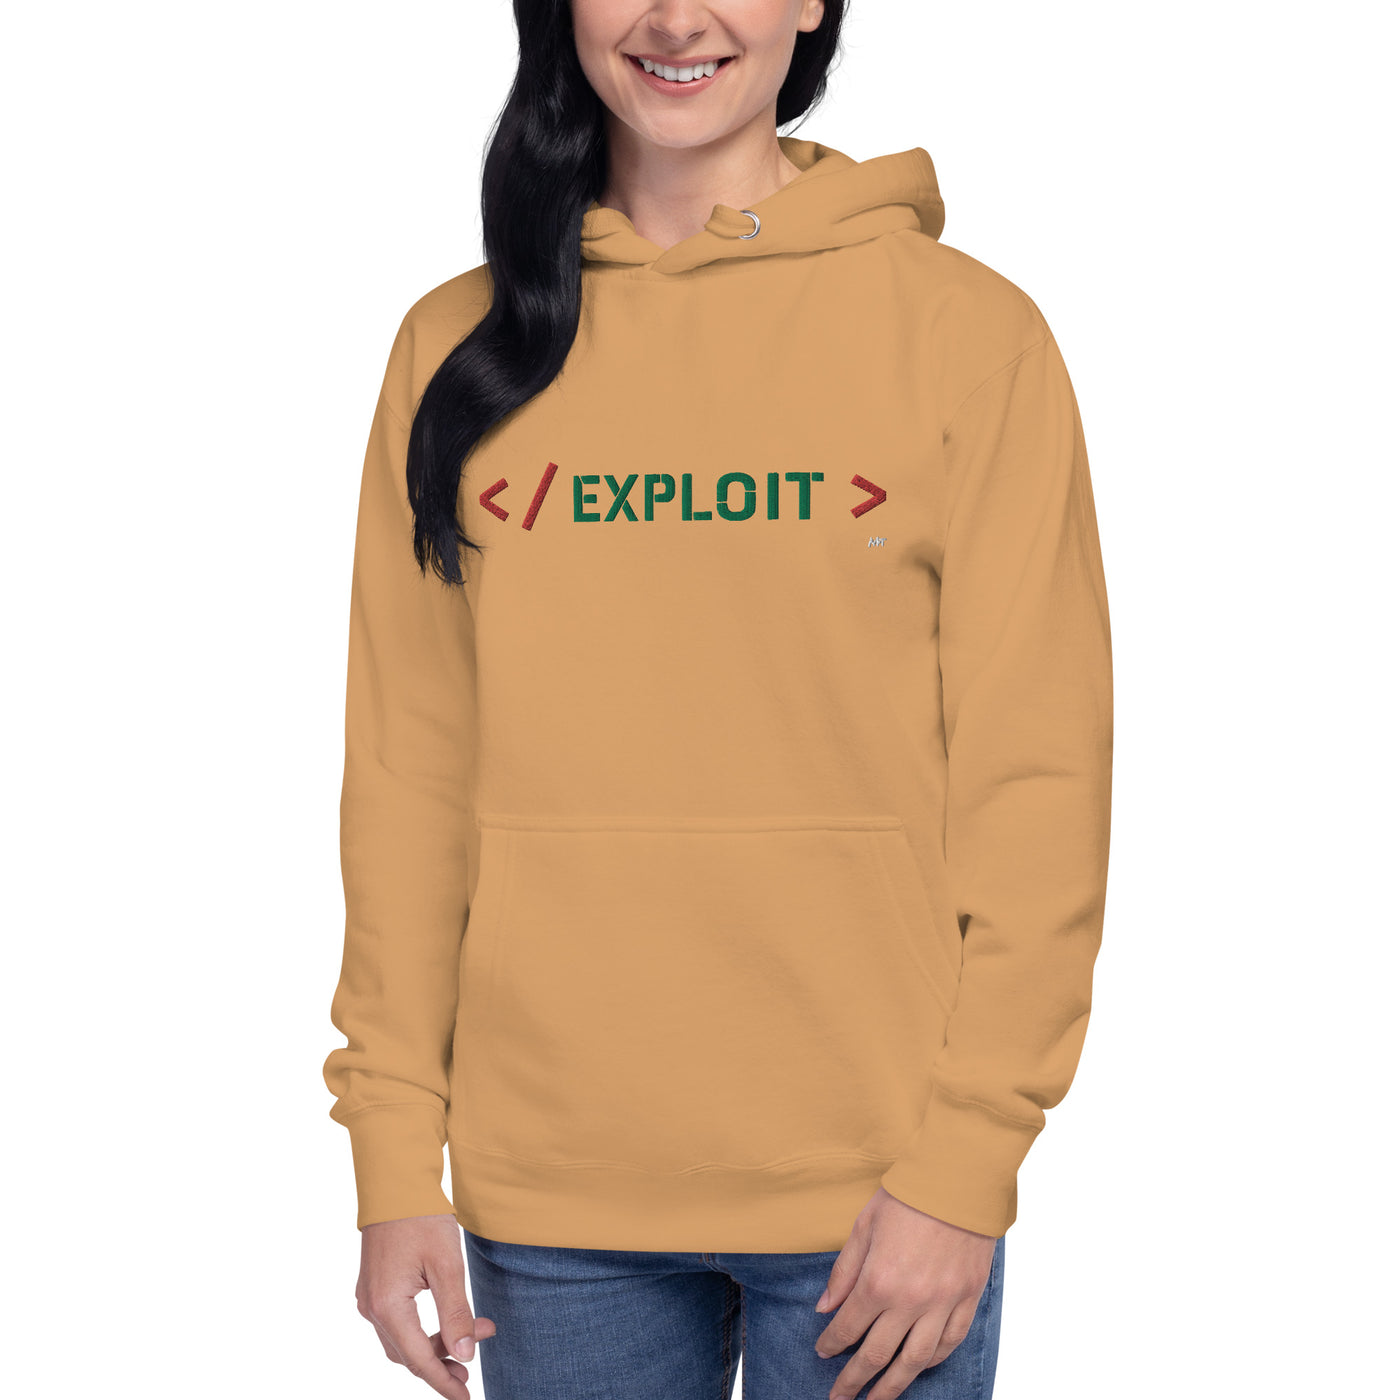 Exploit - Unisex Hoodie (embroidered)